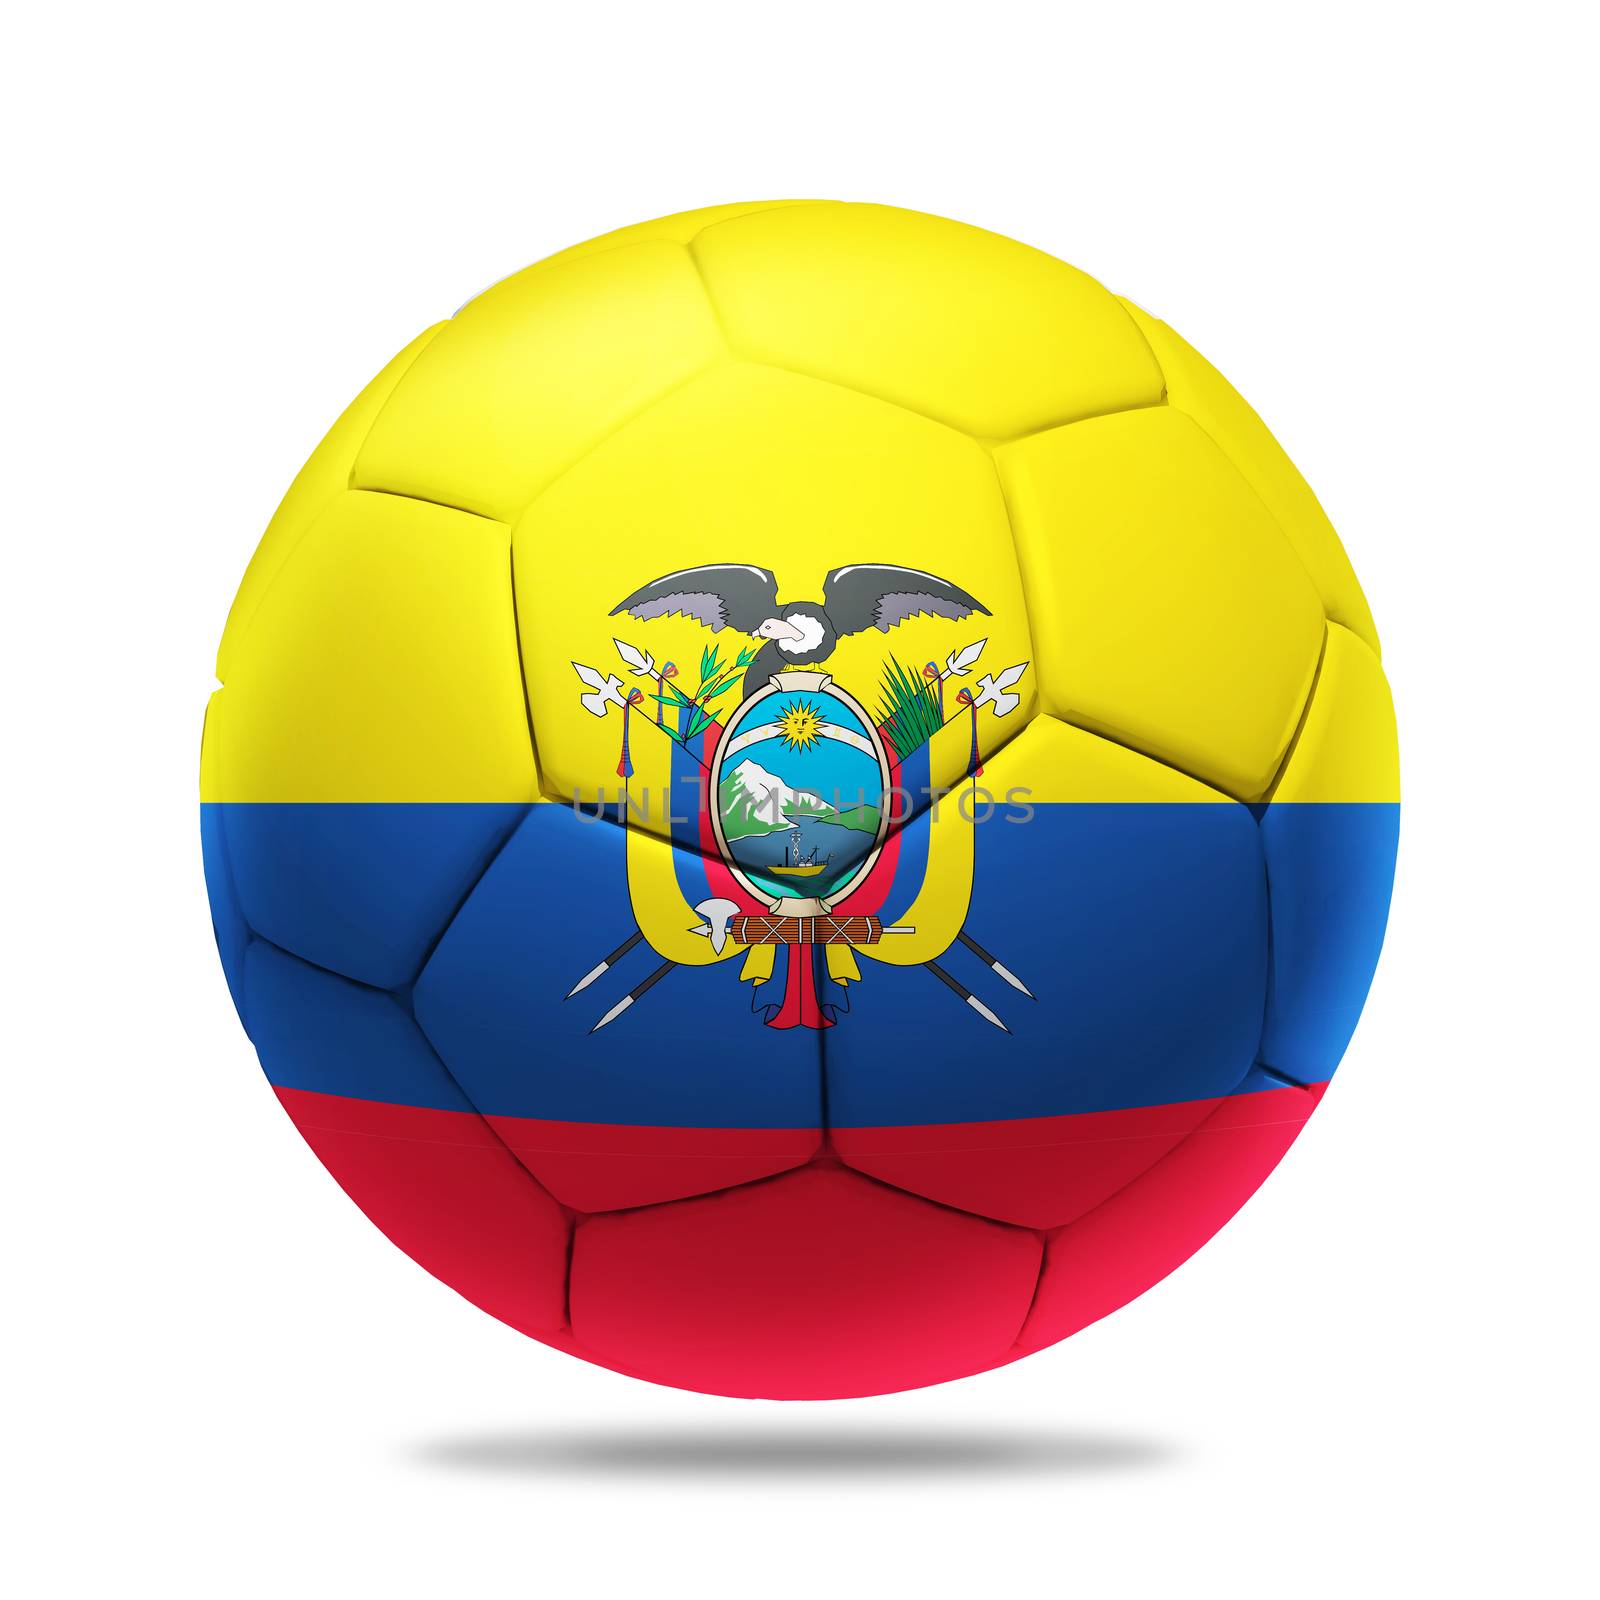 3D soccer ball with Ecuador team flag, isolated on white